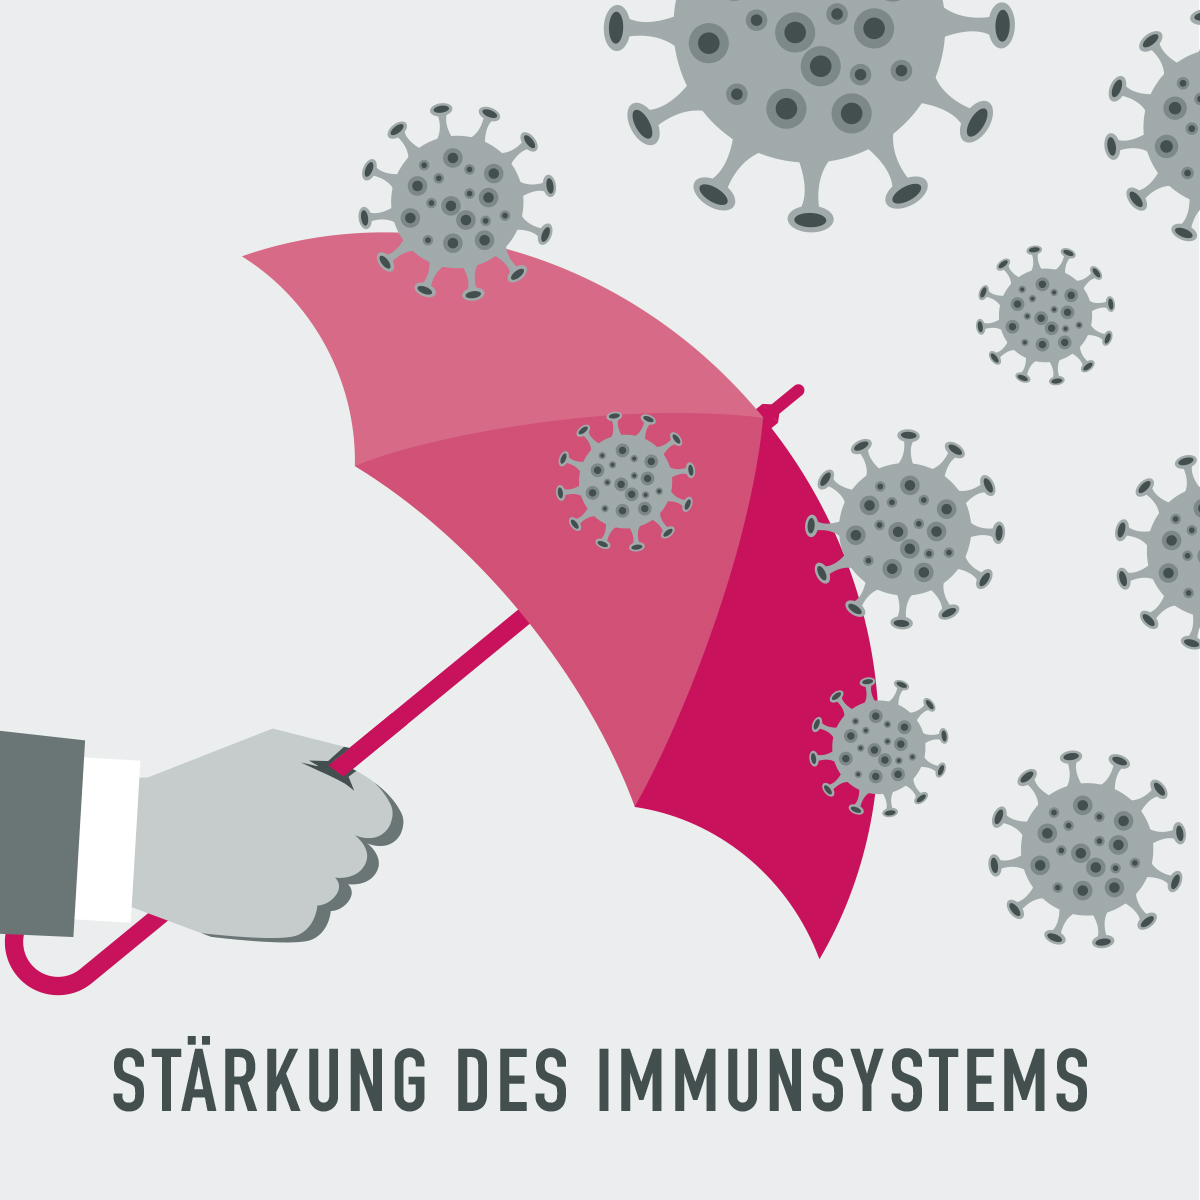 Stärkung des Immunsystems